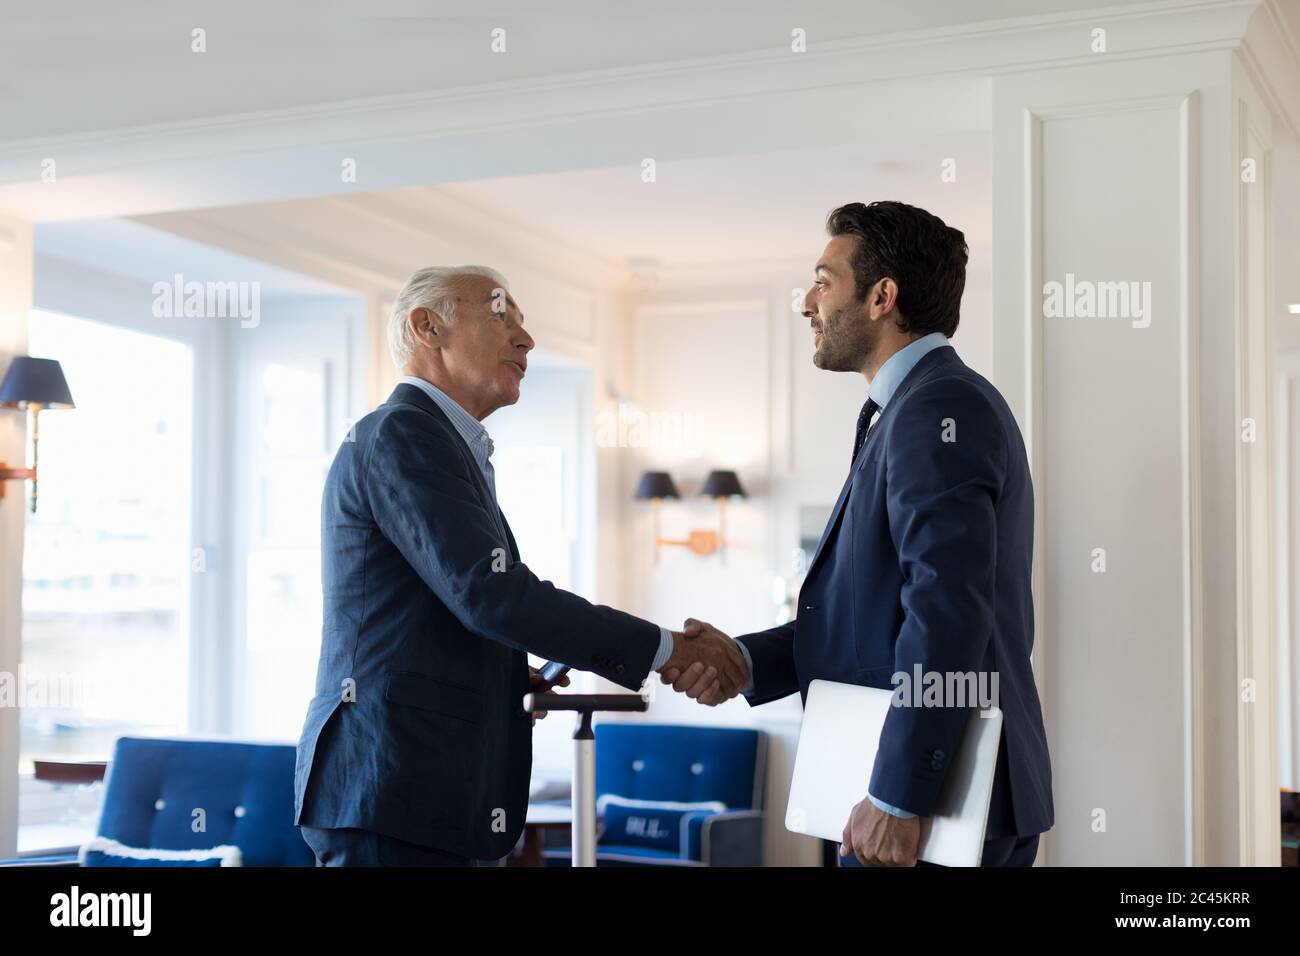 Two businessmen standing indoors, shaking hands. Stock Photo